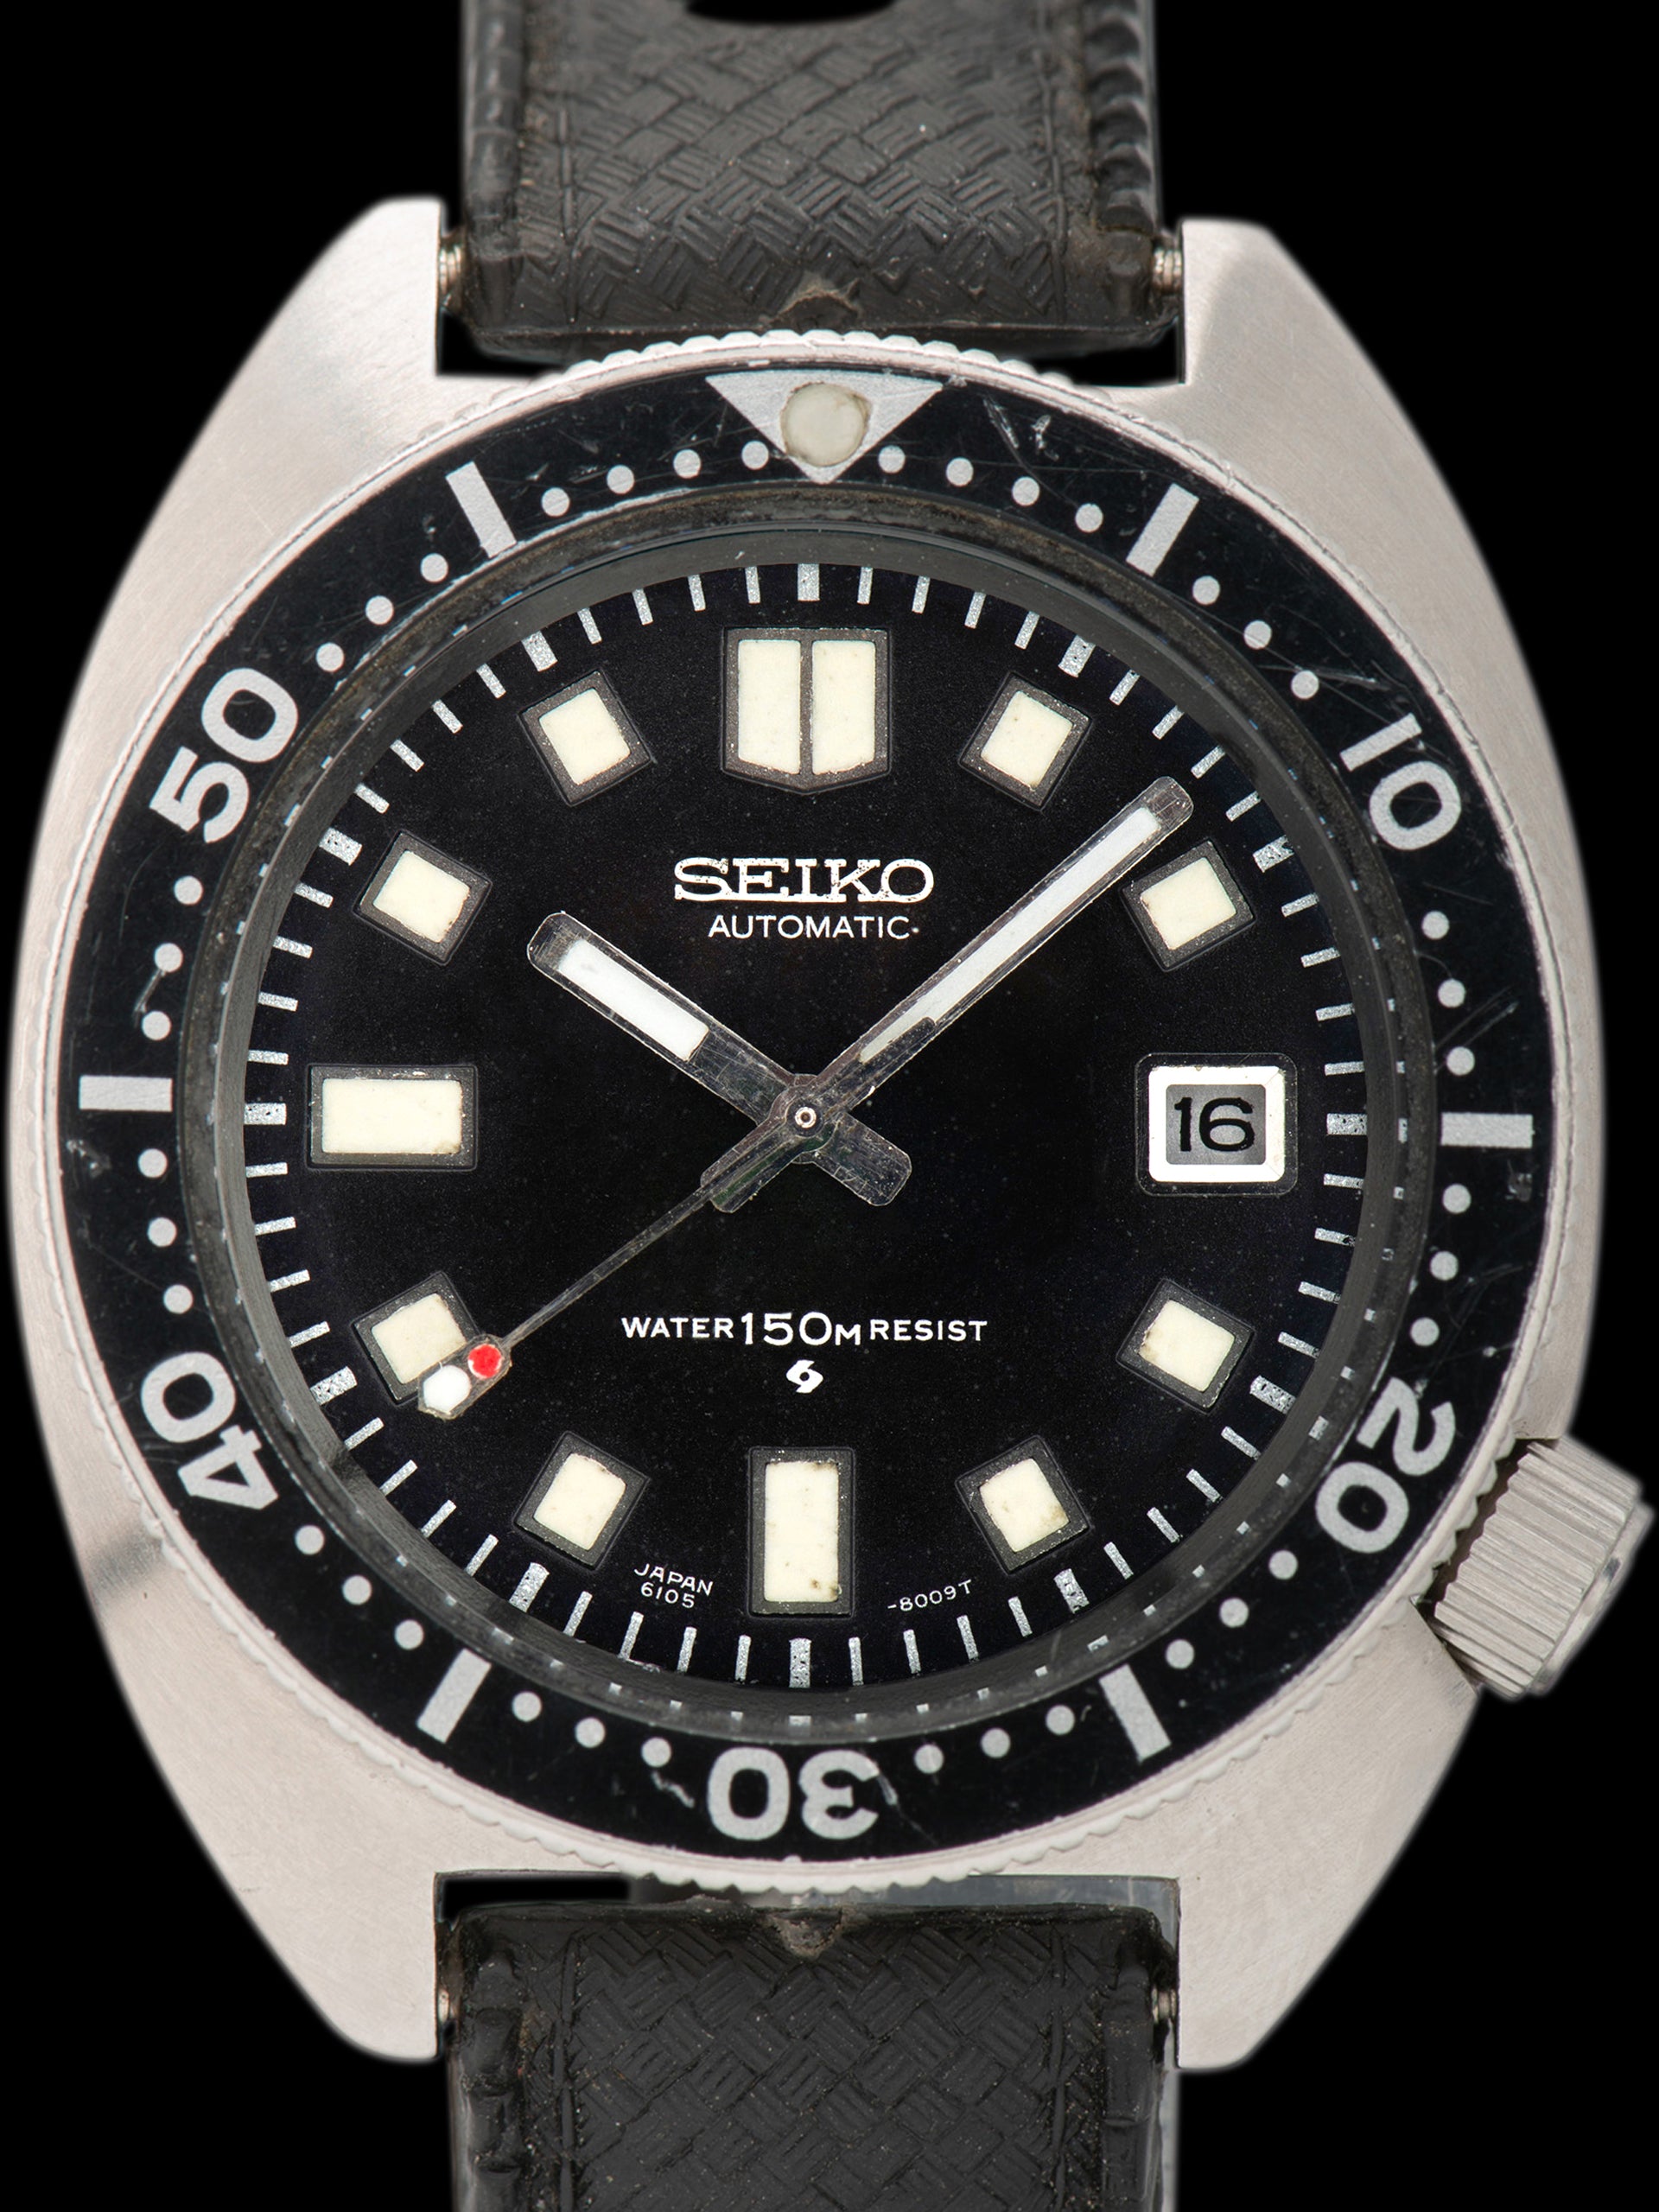 1968 Seiko Diver (Ref. 6105-8009) "Resist / Proof"